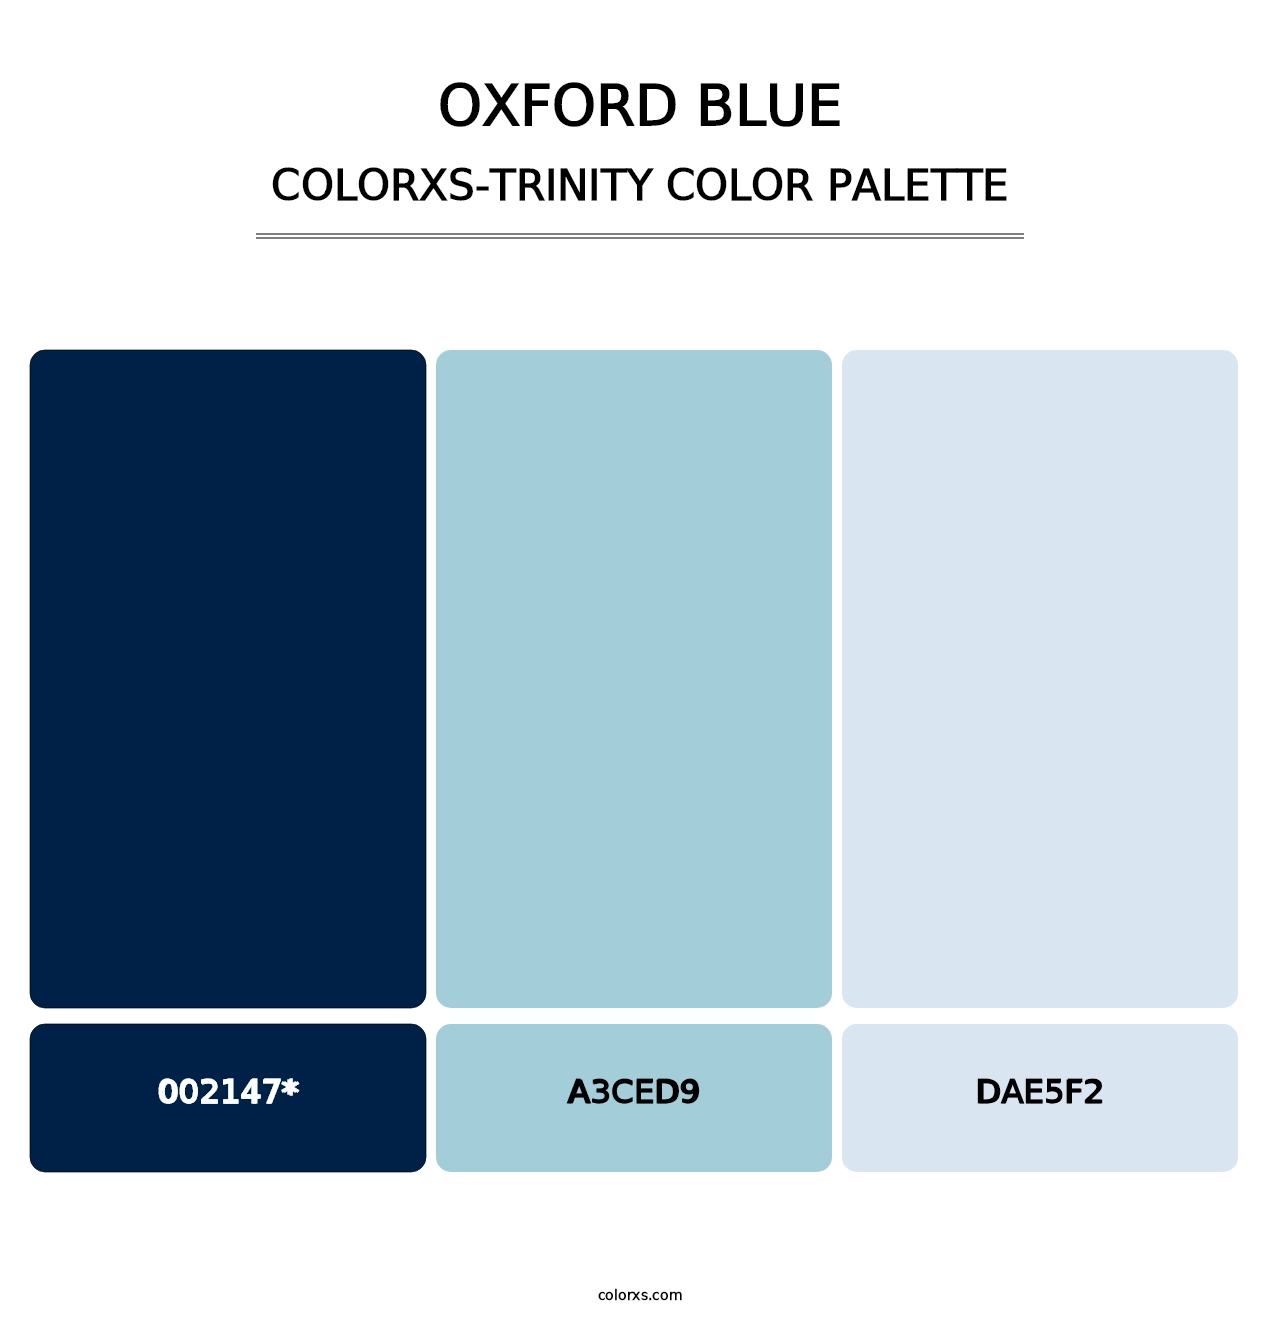 Oxford Blue - Colorxs Trinity Palette